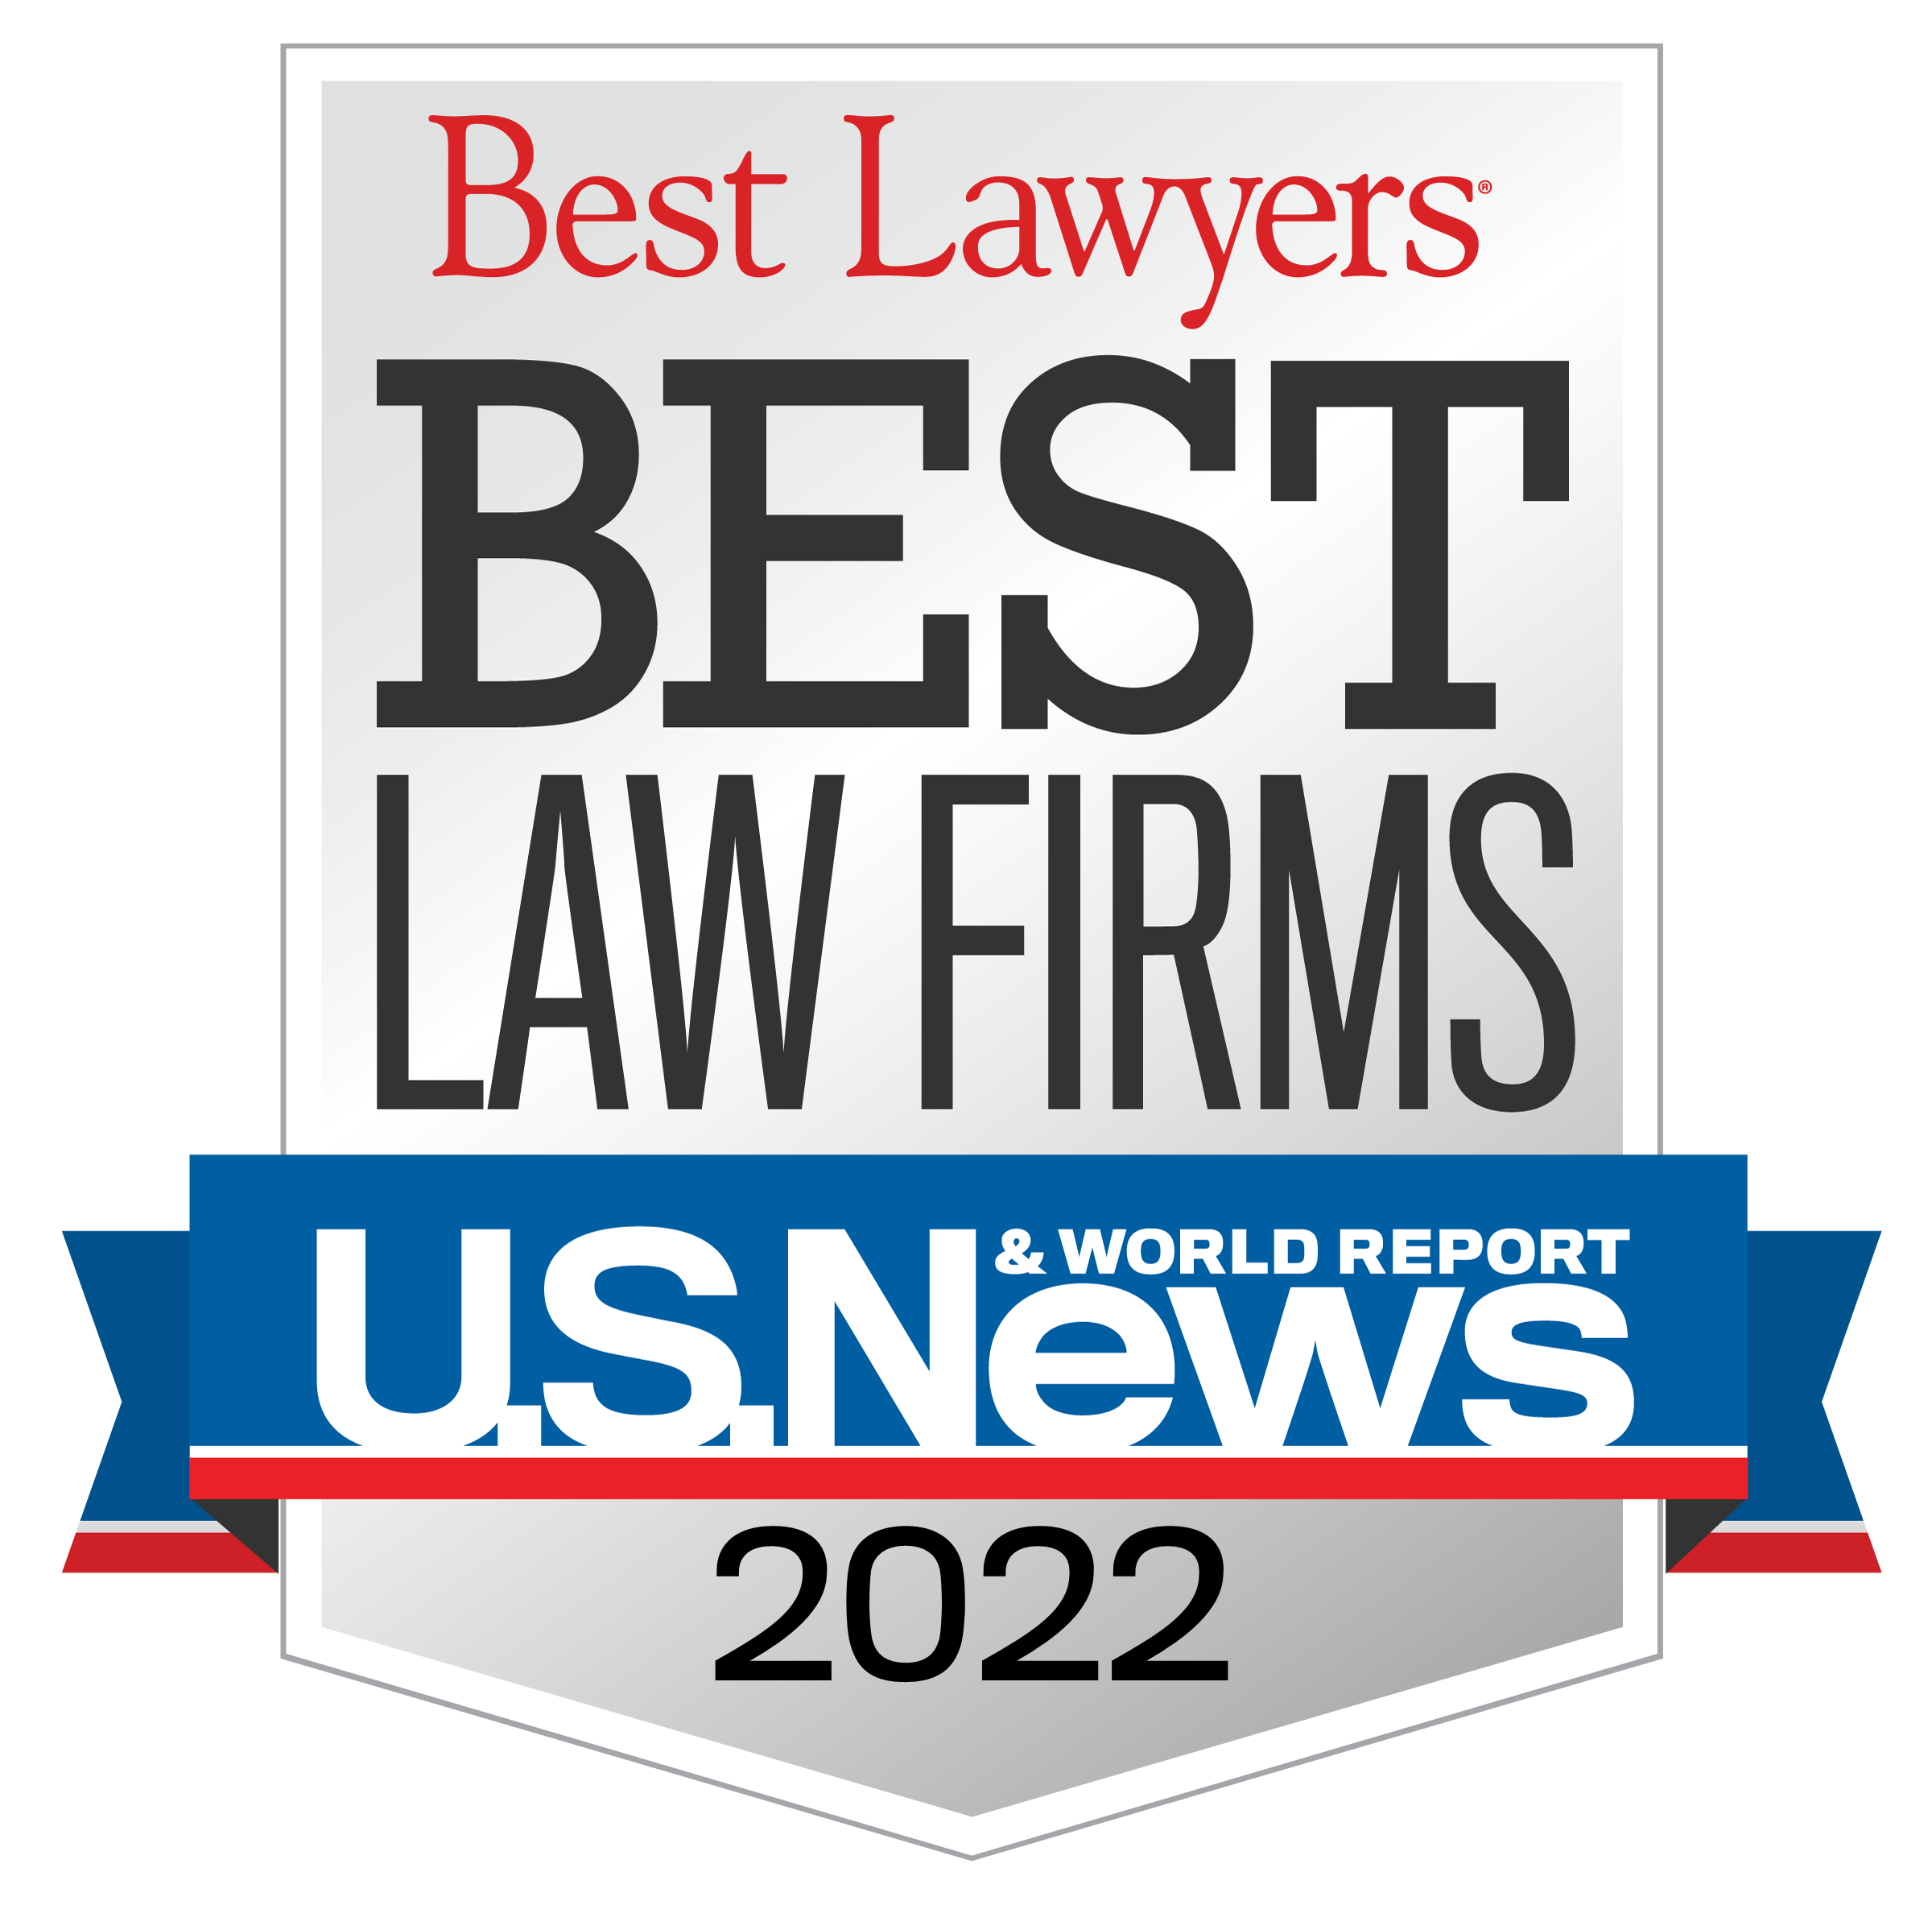 Best Law Firms U.S. News 2022 Badge